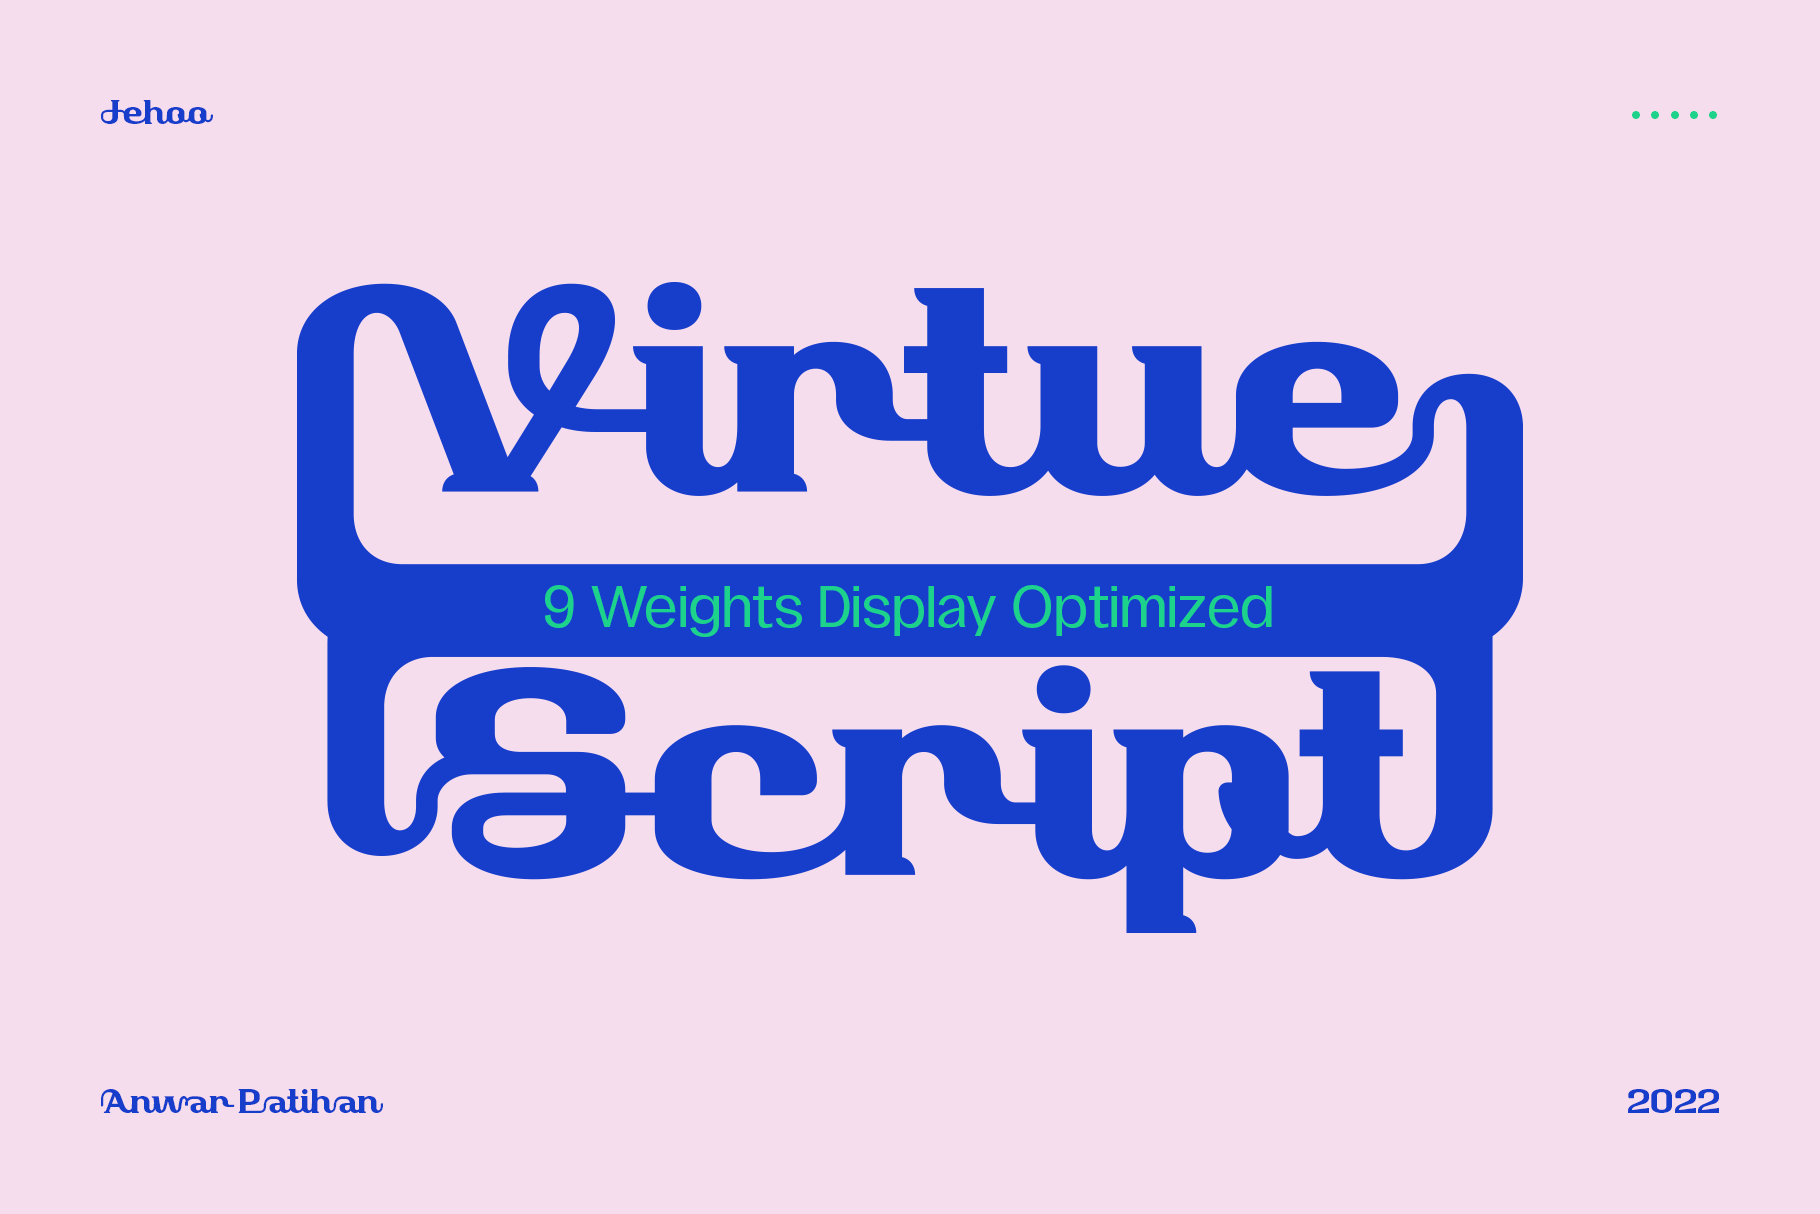 Virtue Script Semibold